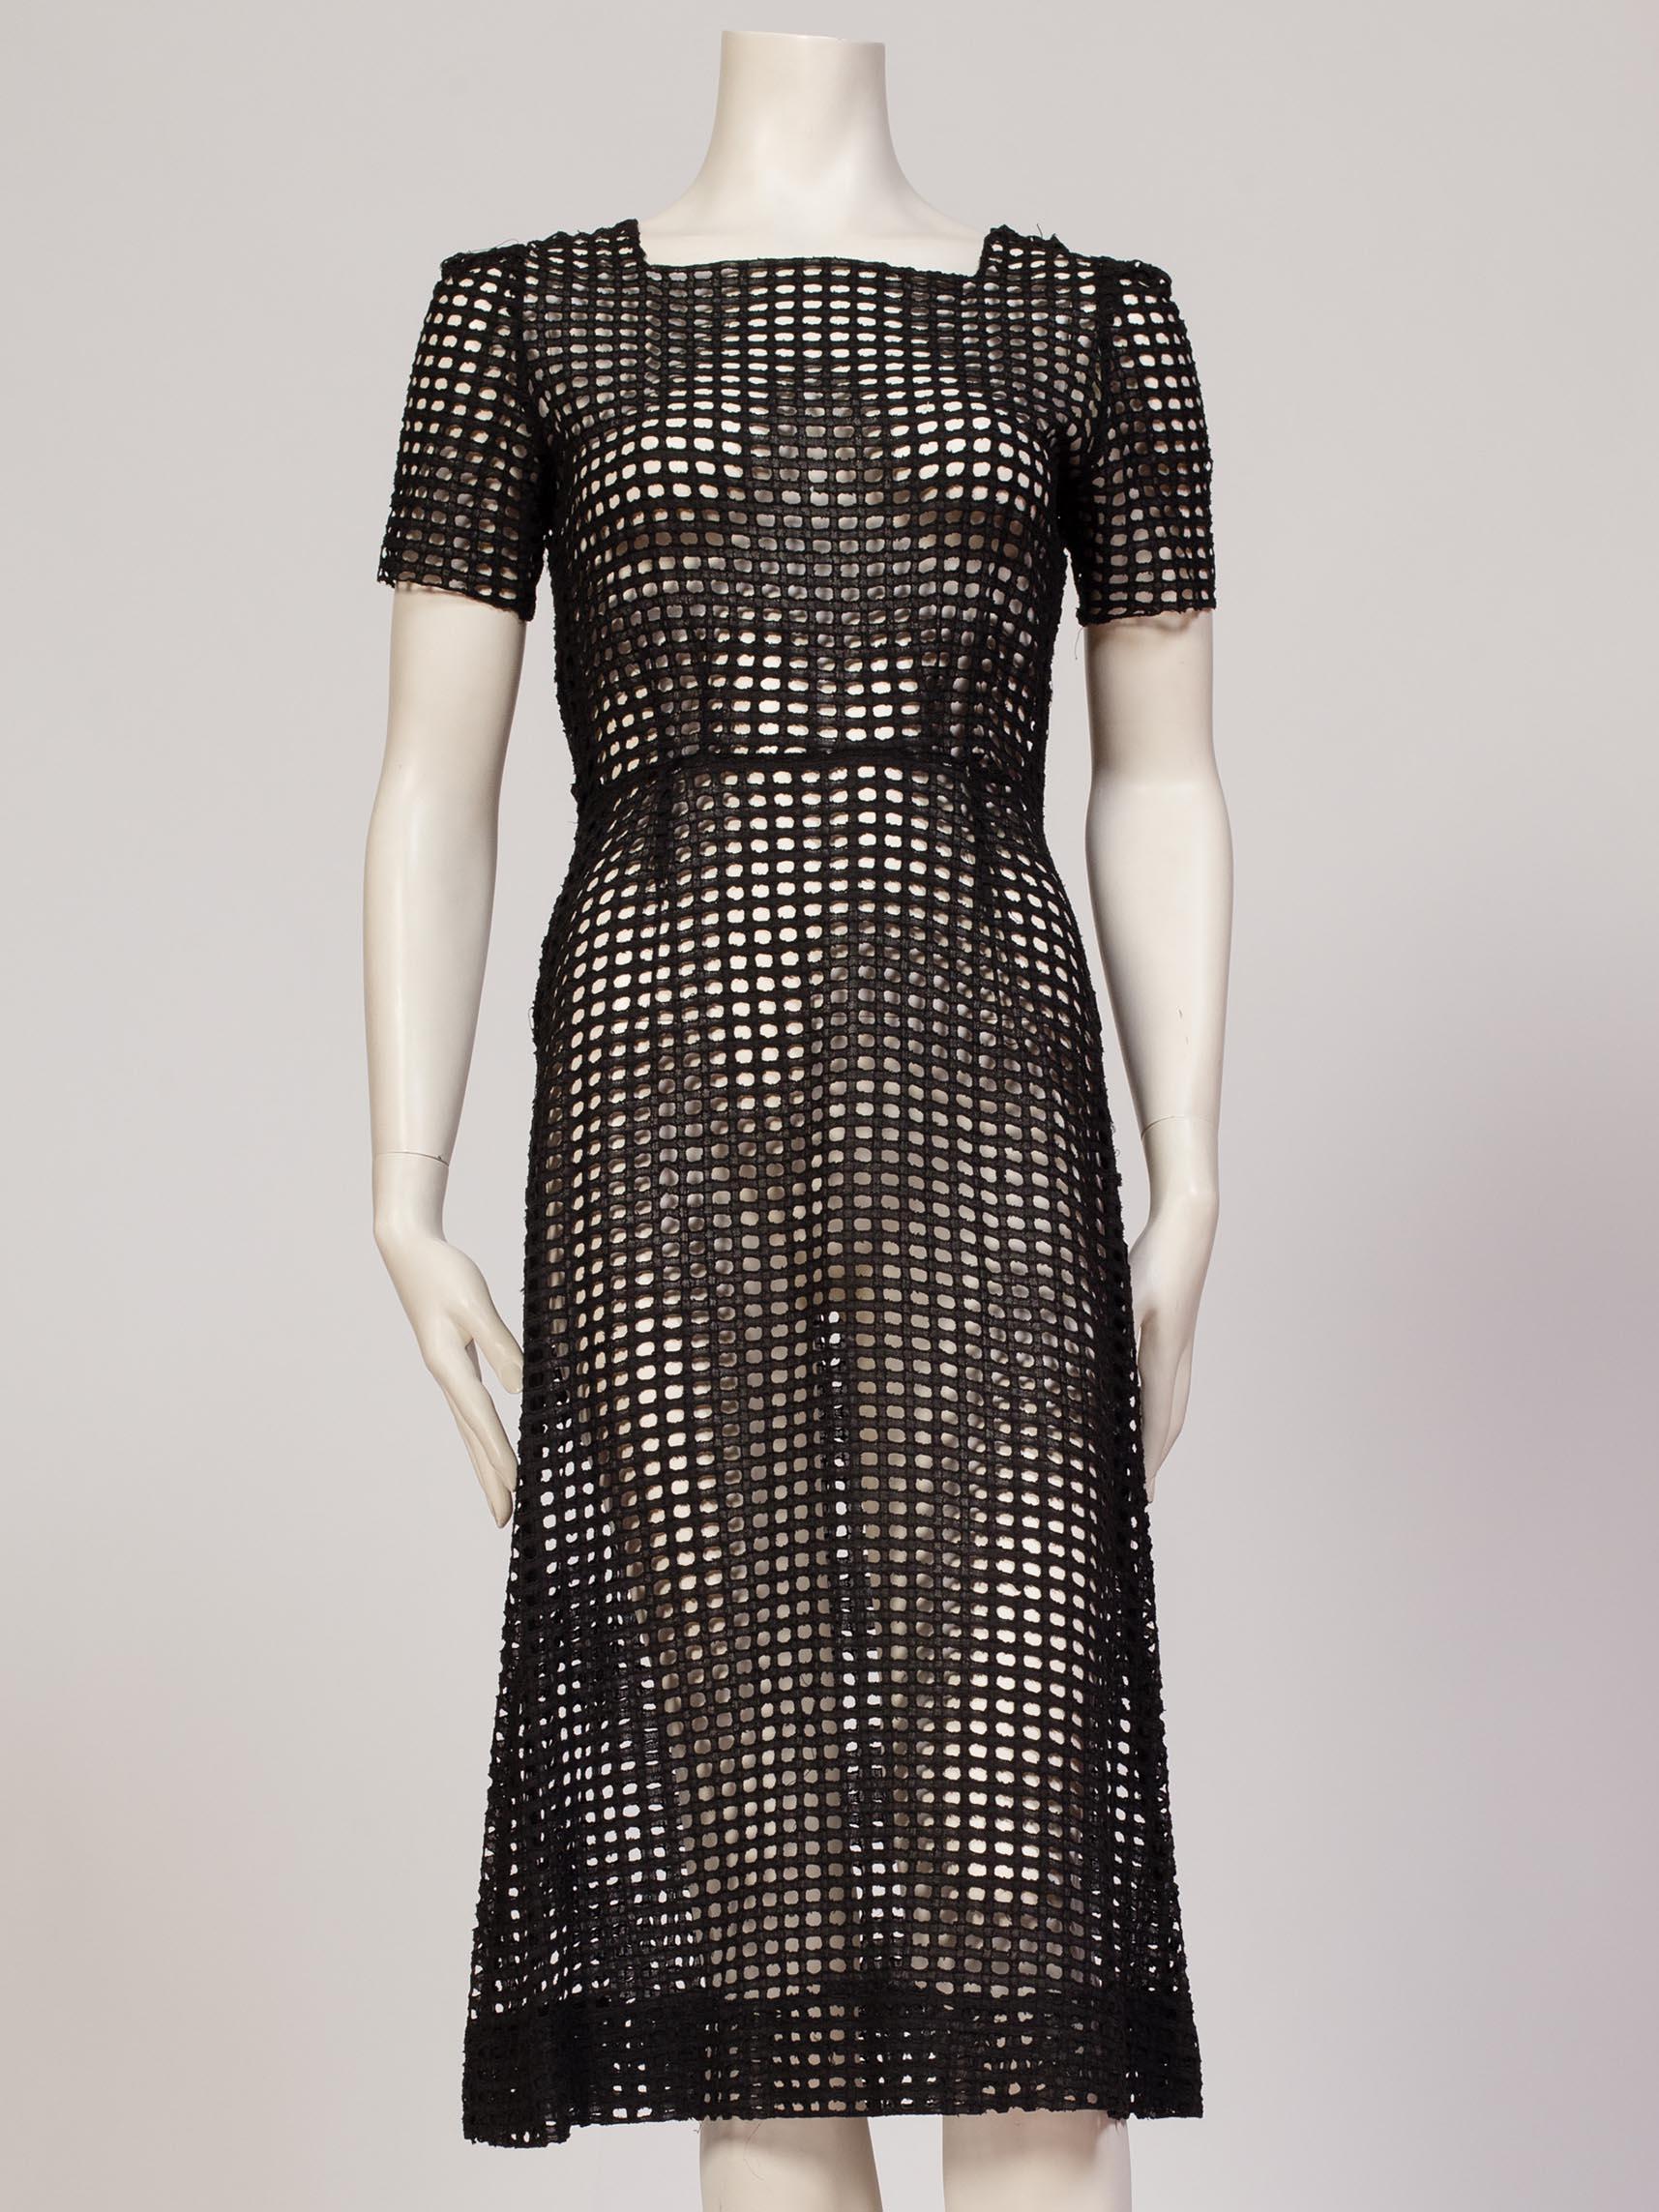 1930s Sheer Geometric Eyelet Cotton Lace Dress
